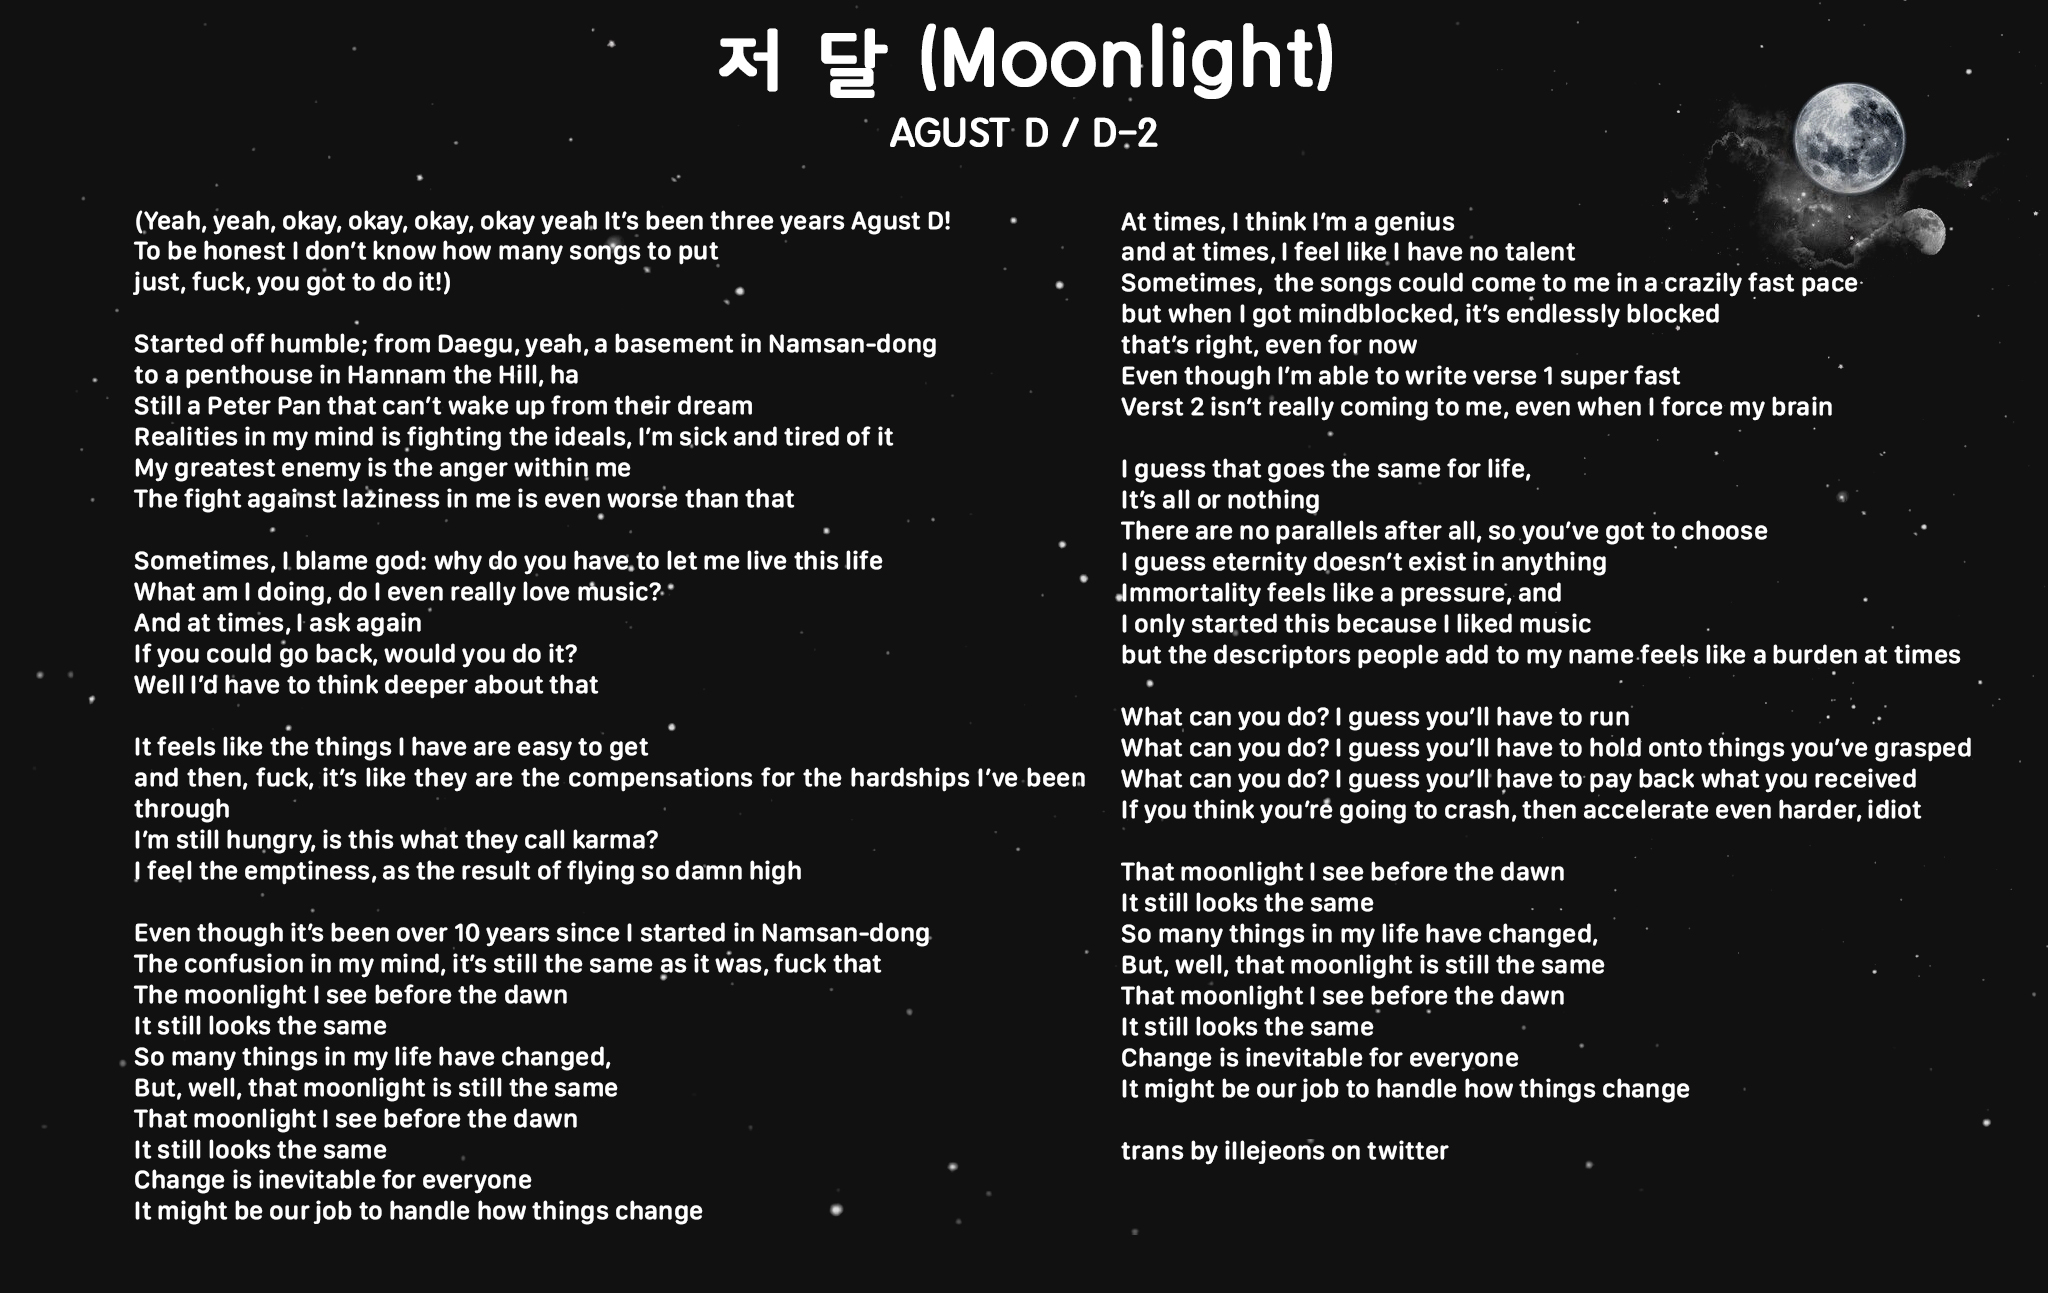 AGUST D - Moonlight lyrics translations"change is inevitable for every...